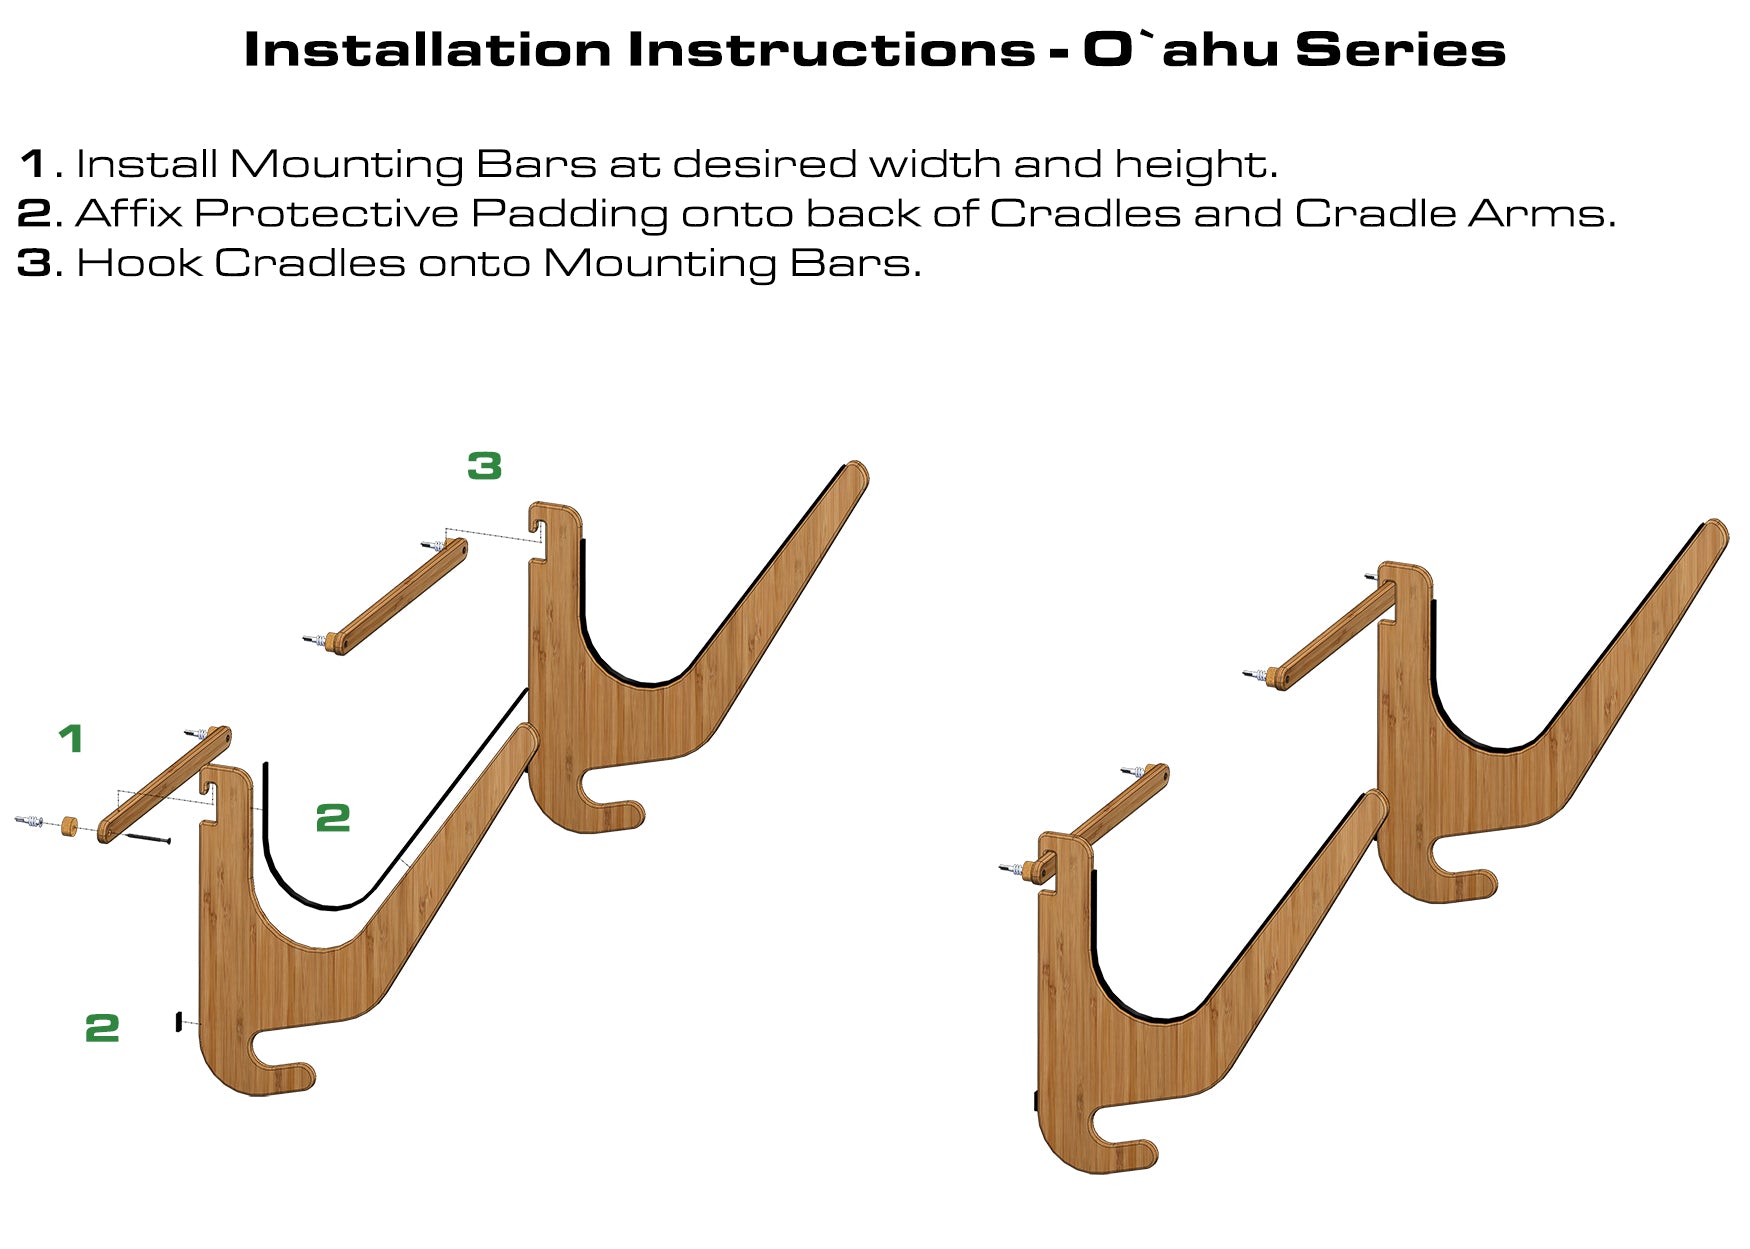 SUP Rack Installation Instructions - Bamboo Paddleboard Rack by Grassracks